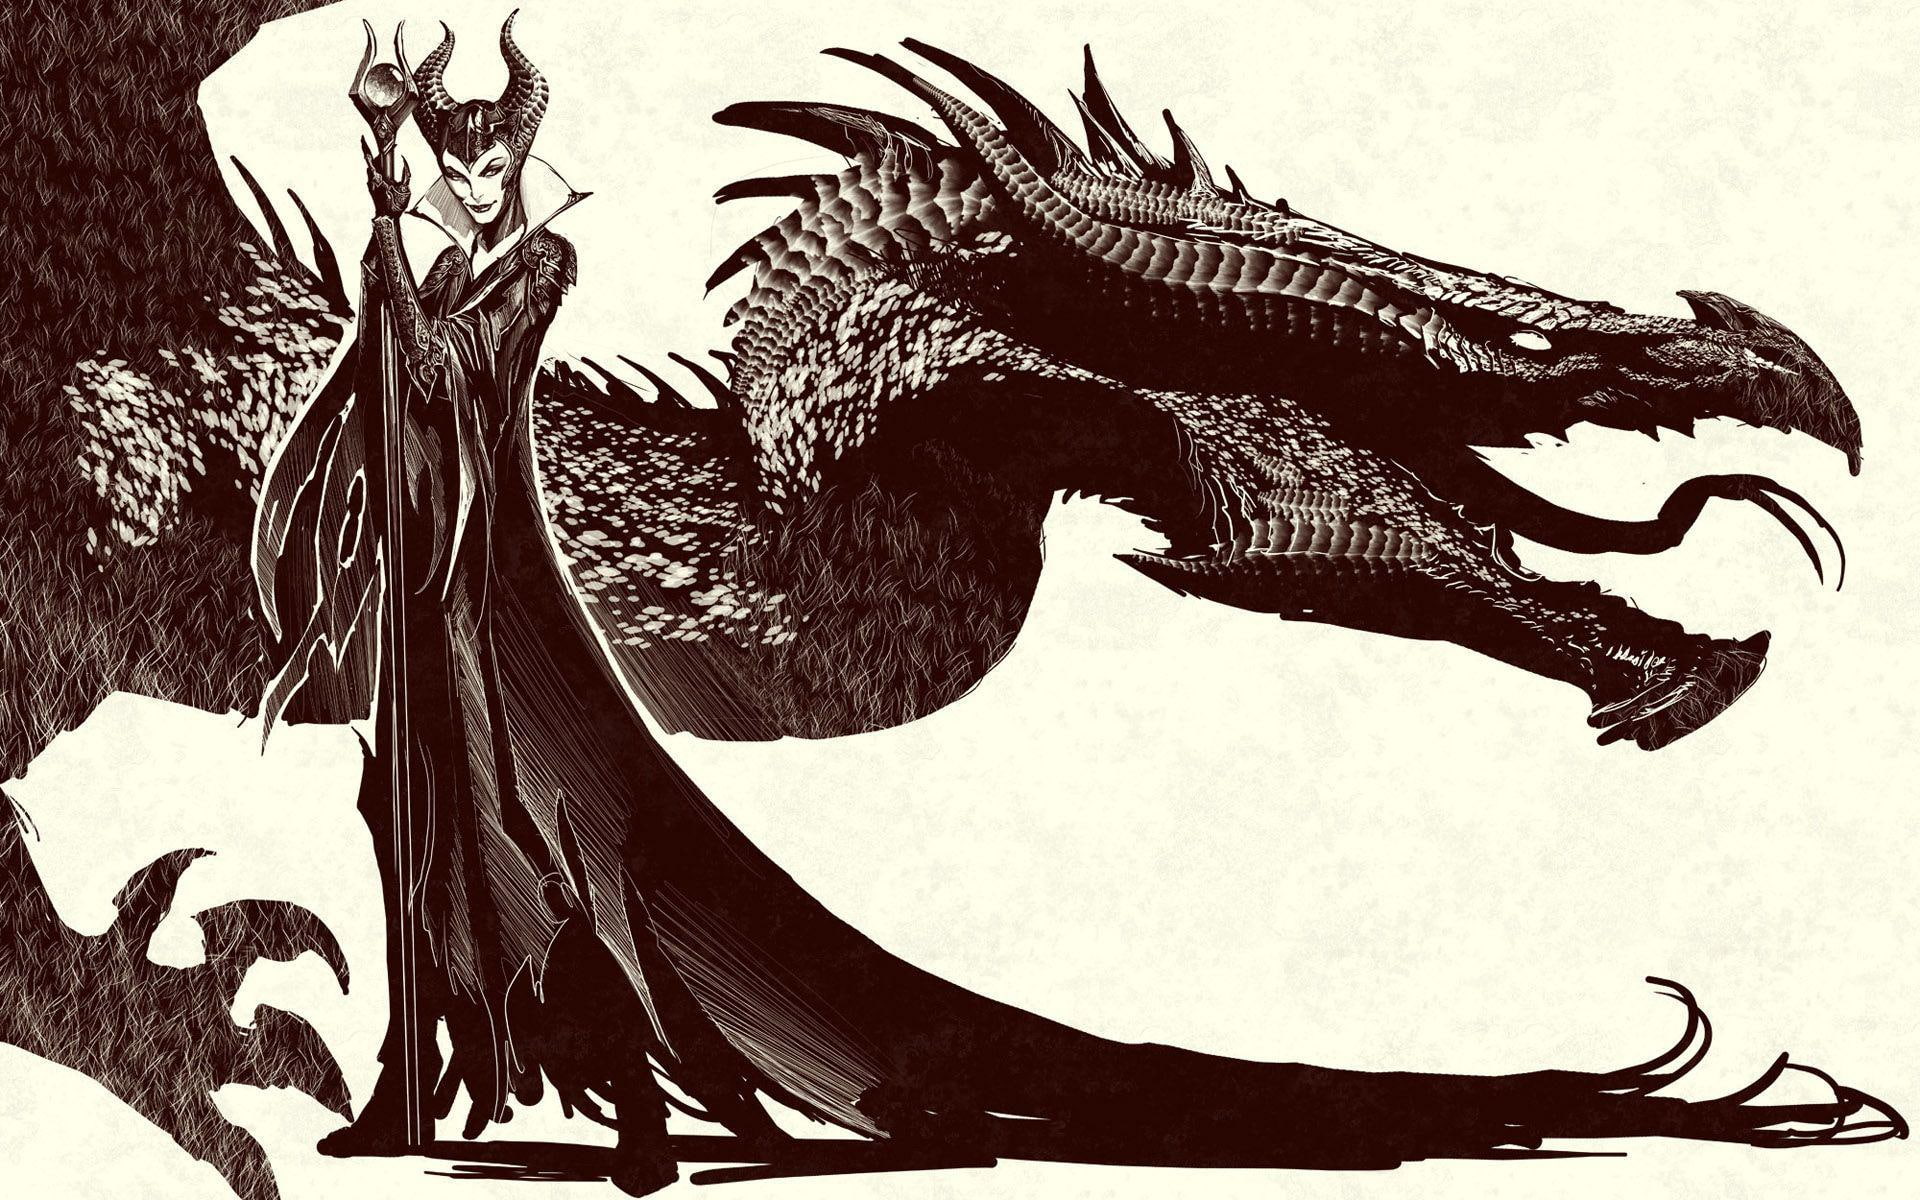 Maleficent - Sleeping Beauty, maleficent and dragon illustration